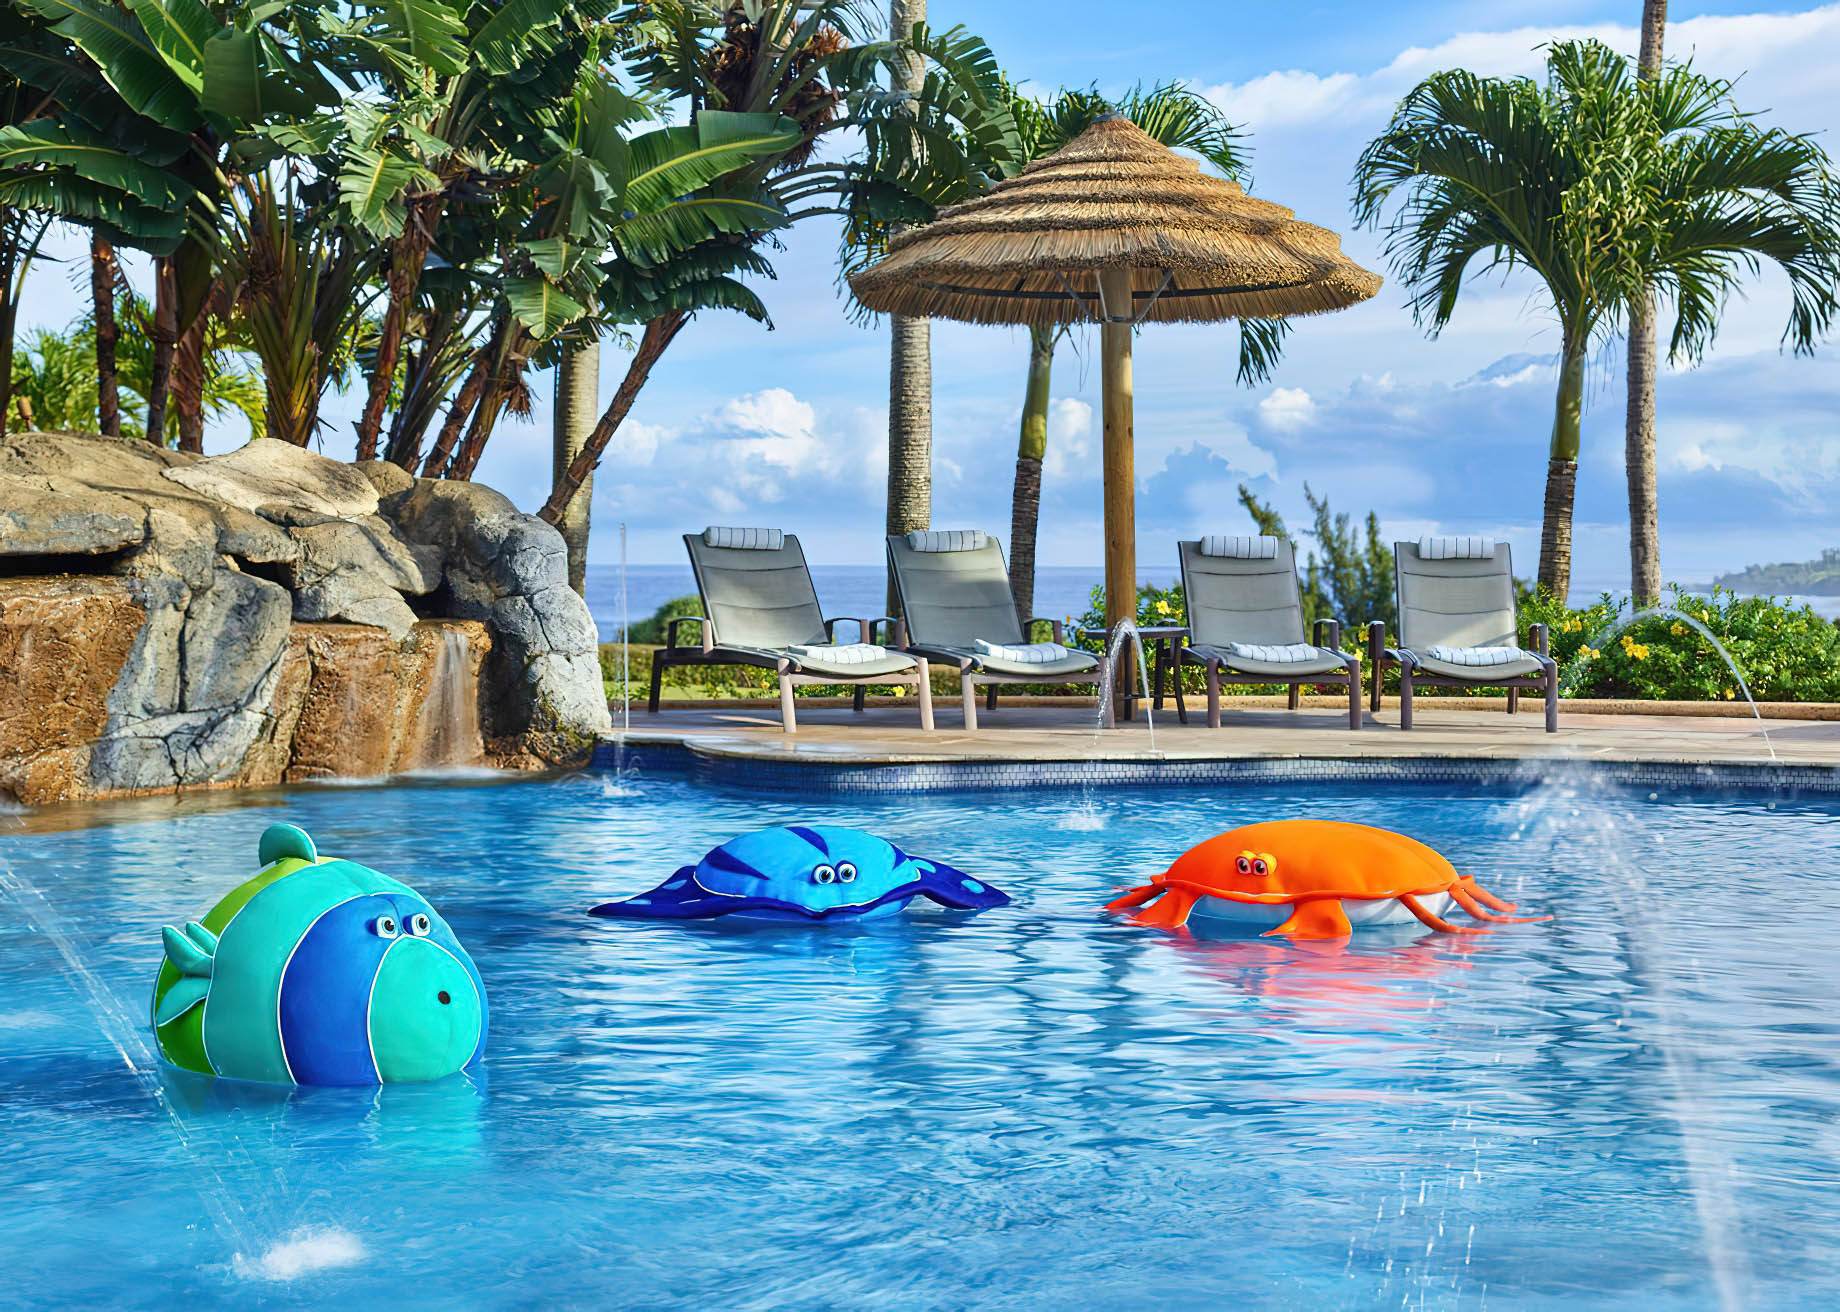 The Ritz-Carlton Maui, Kapalua Resort - Kapalua, HI, USA - Pool Toys